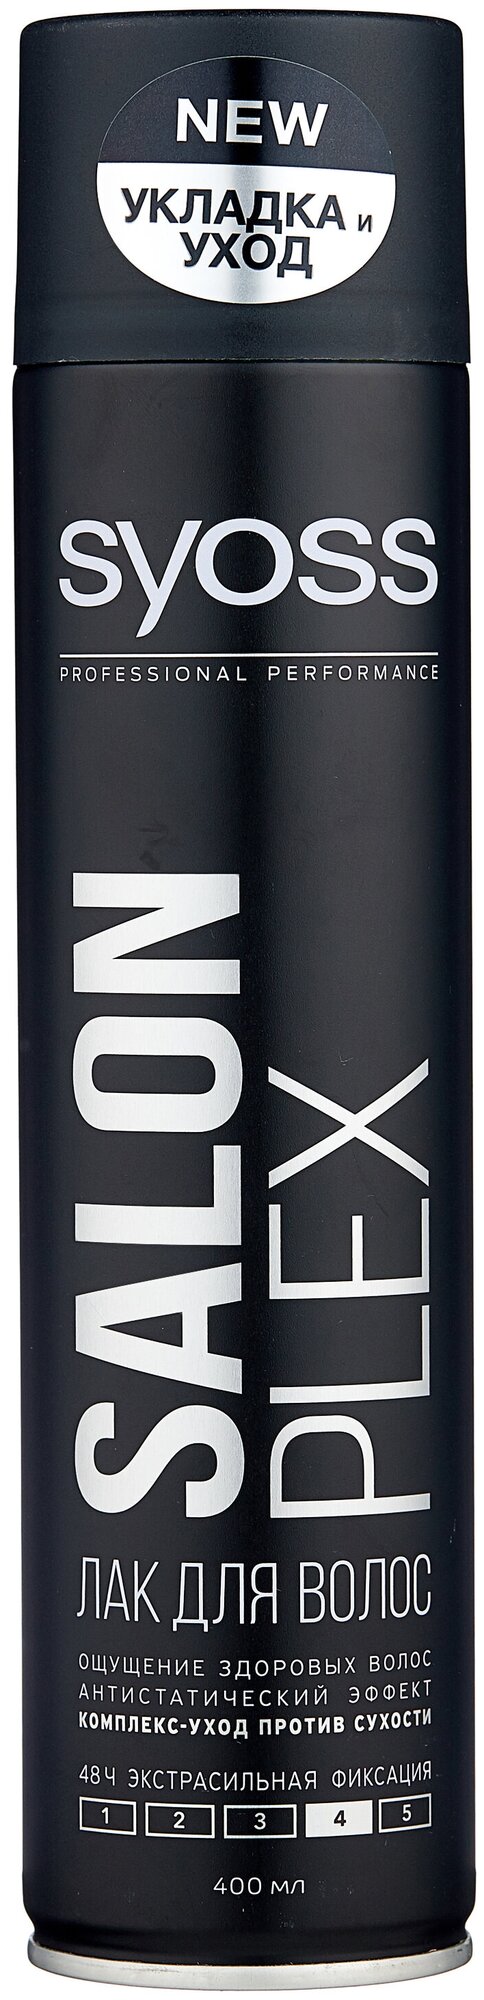 Сьосс / Syoss Salon Plex - Лак для волос фиксация 4, 400 мл